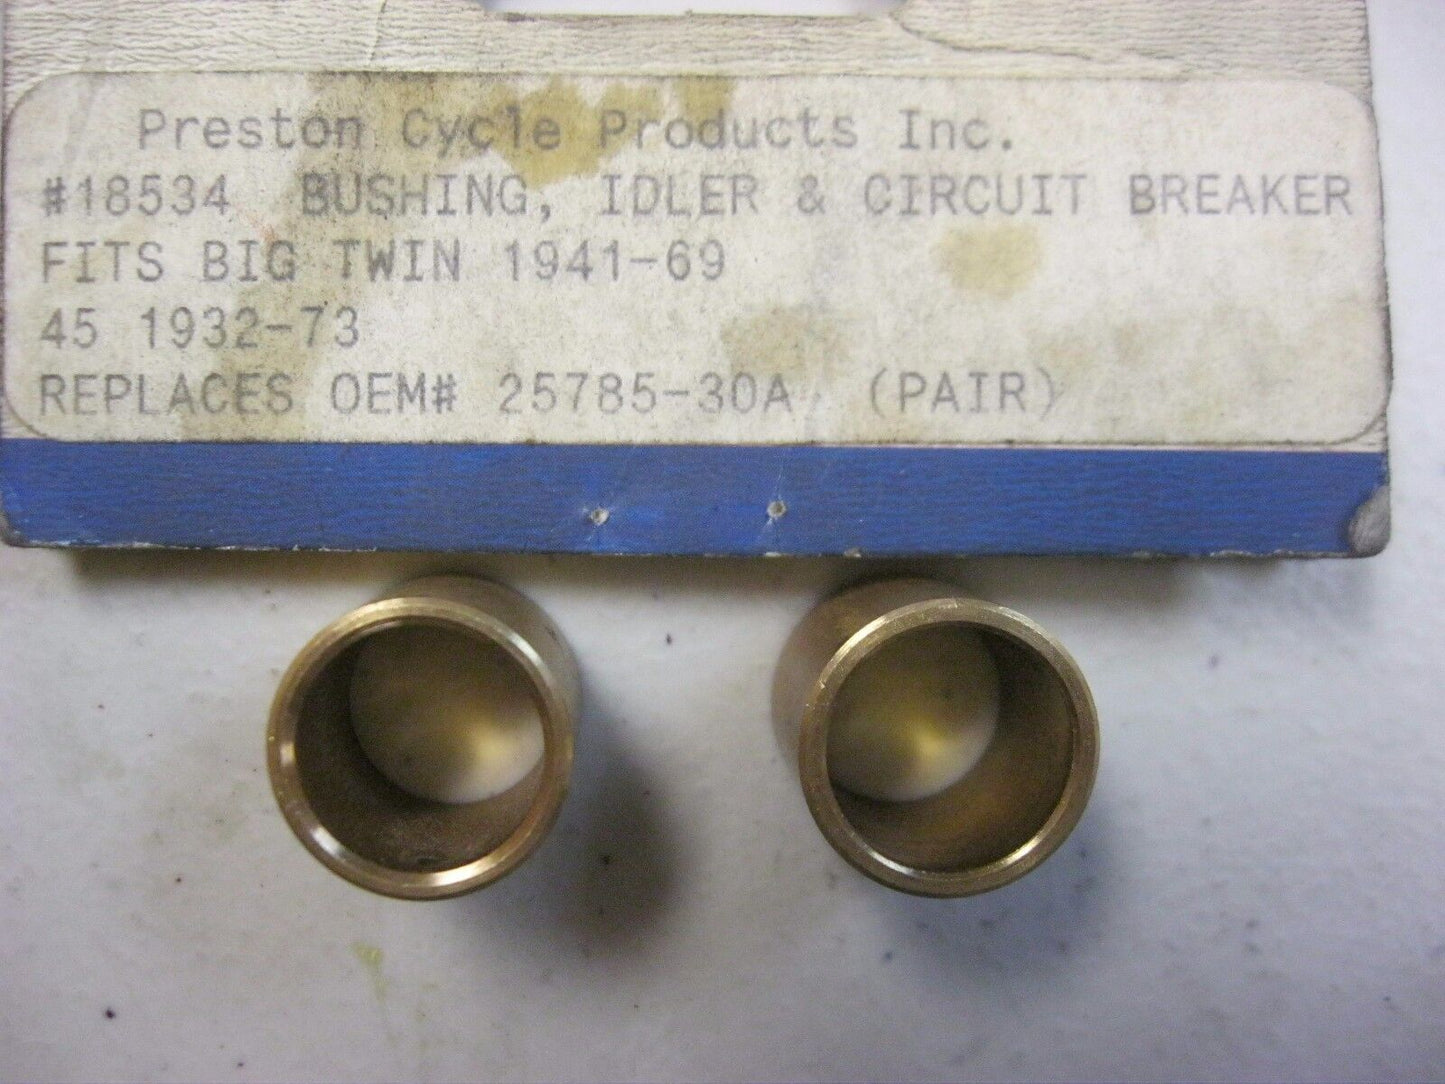 PRESTON CYCLE 18534 IDLER & CIRCUIT BREAKER BUSHING (PAIR) FOR BT 41-69 45 32-73